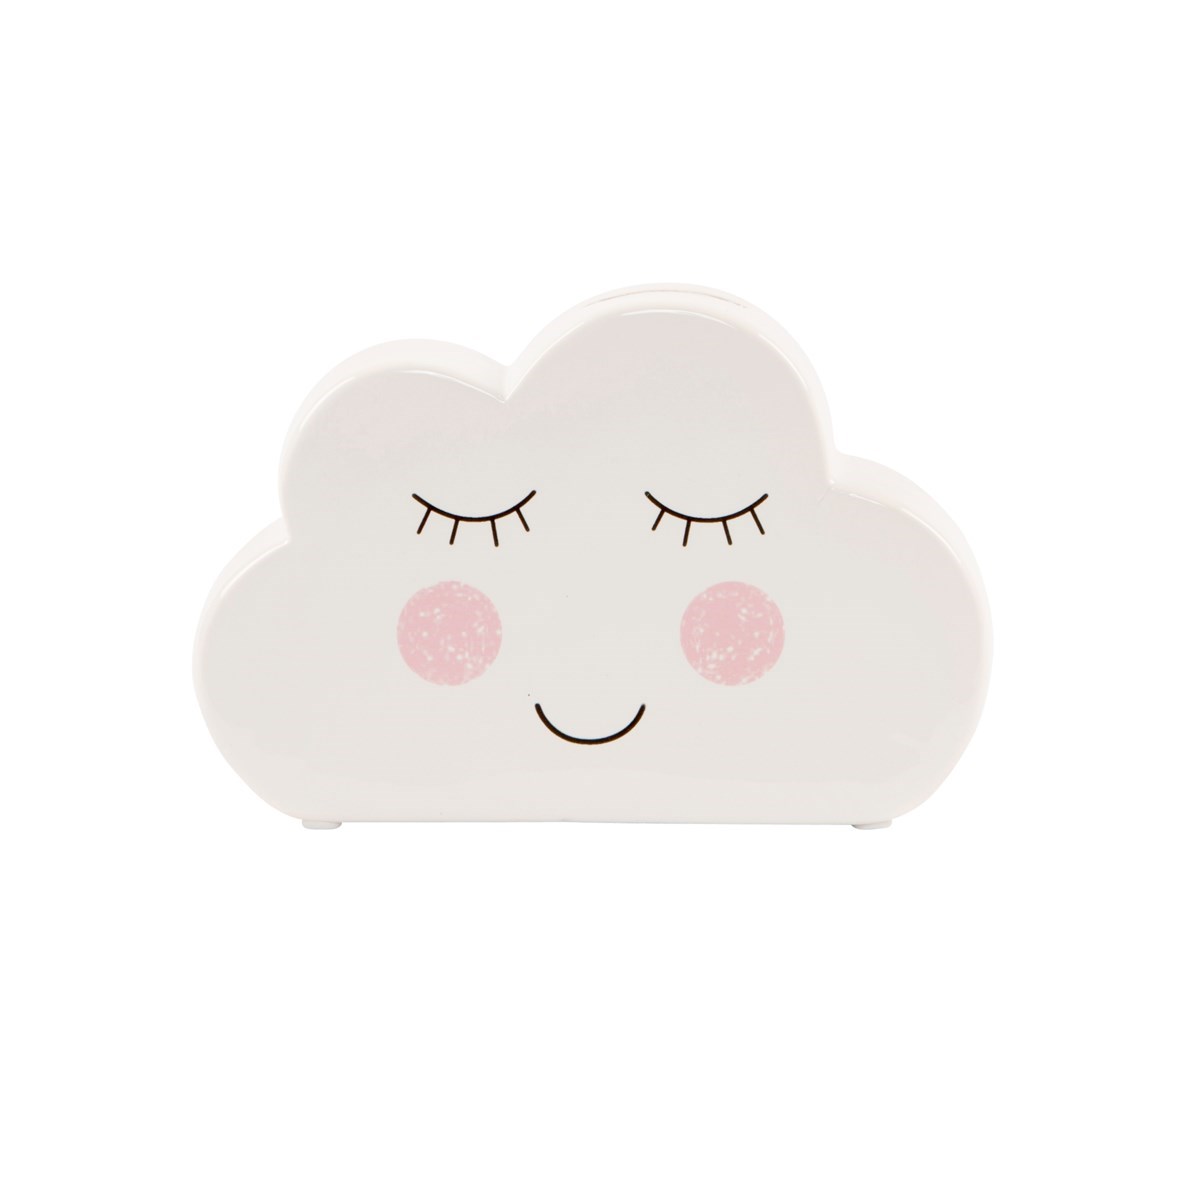 Sweet dreams cloud money box